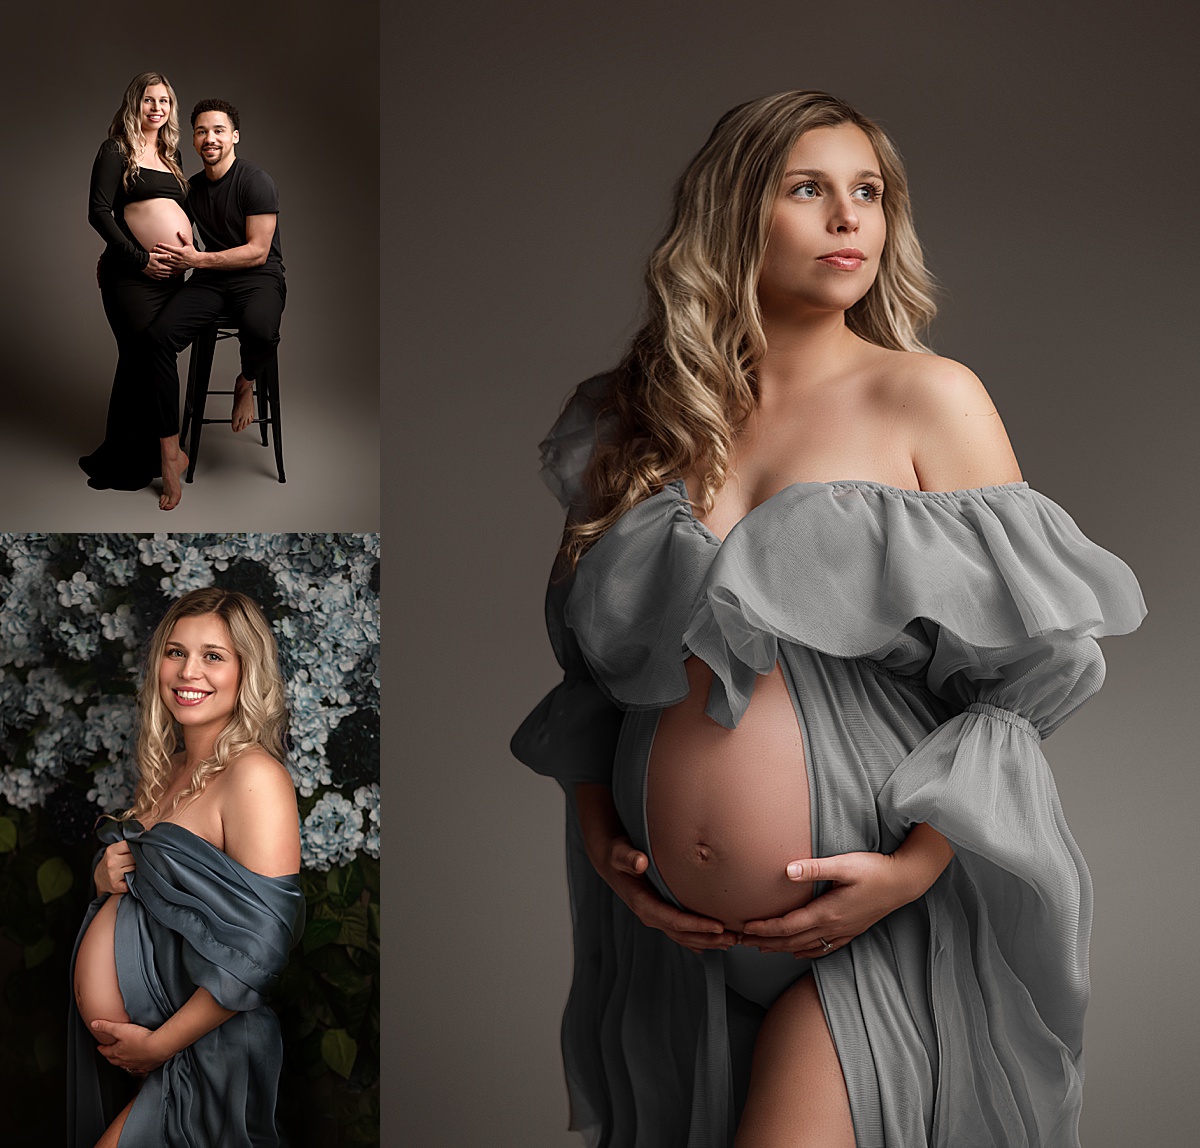 lincoln ne photographers, maternity photoshoot in omaha, fine art maternity portraiture, luxury maternity session nebraska, family photographer nebraska